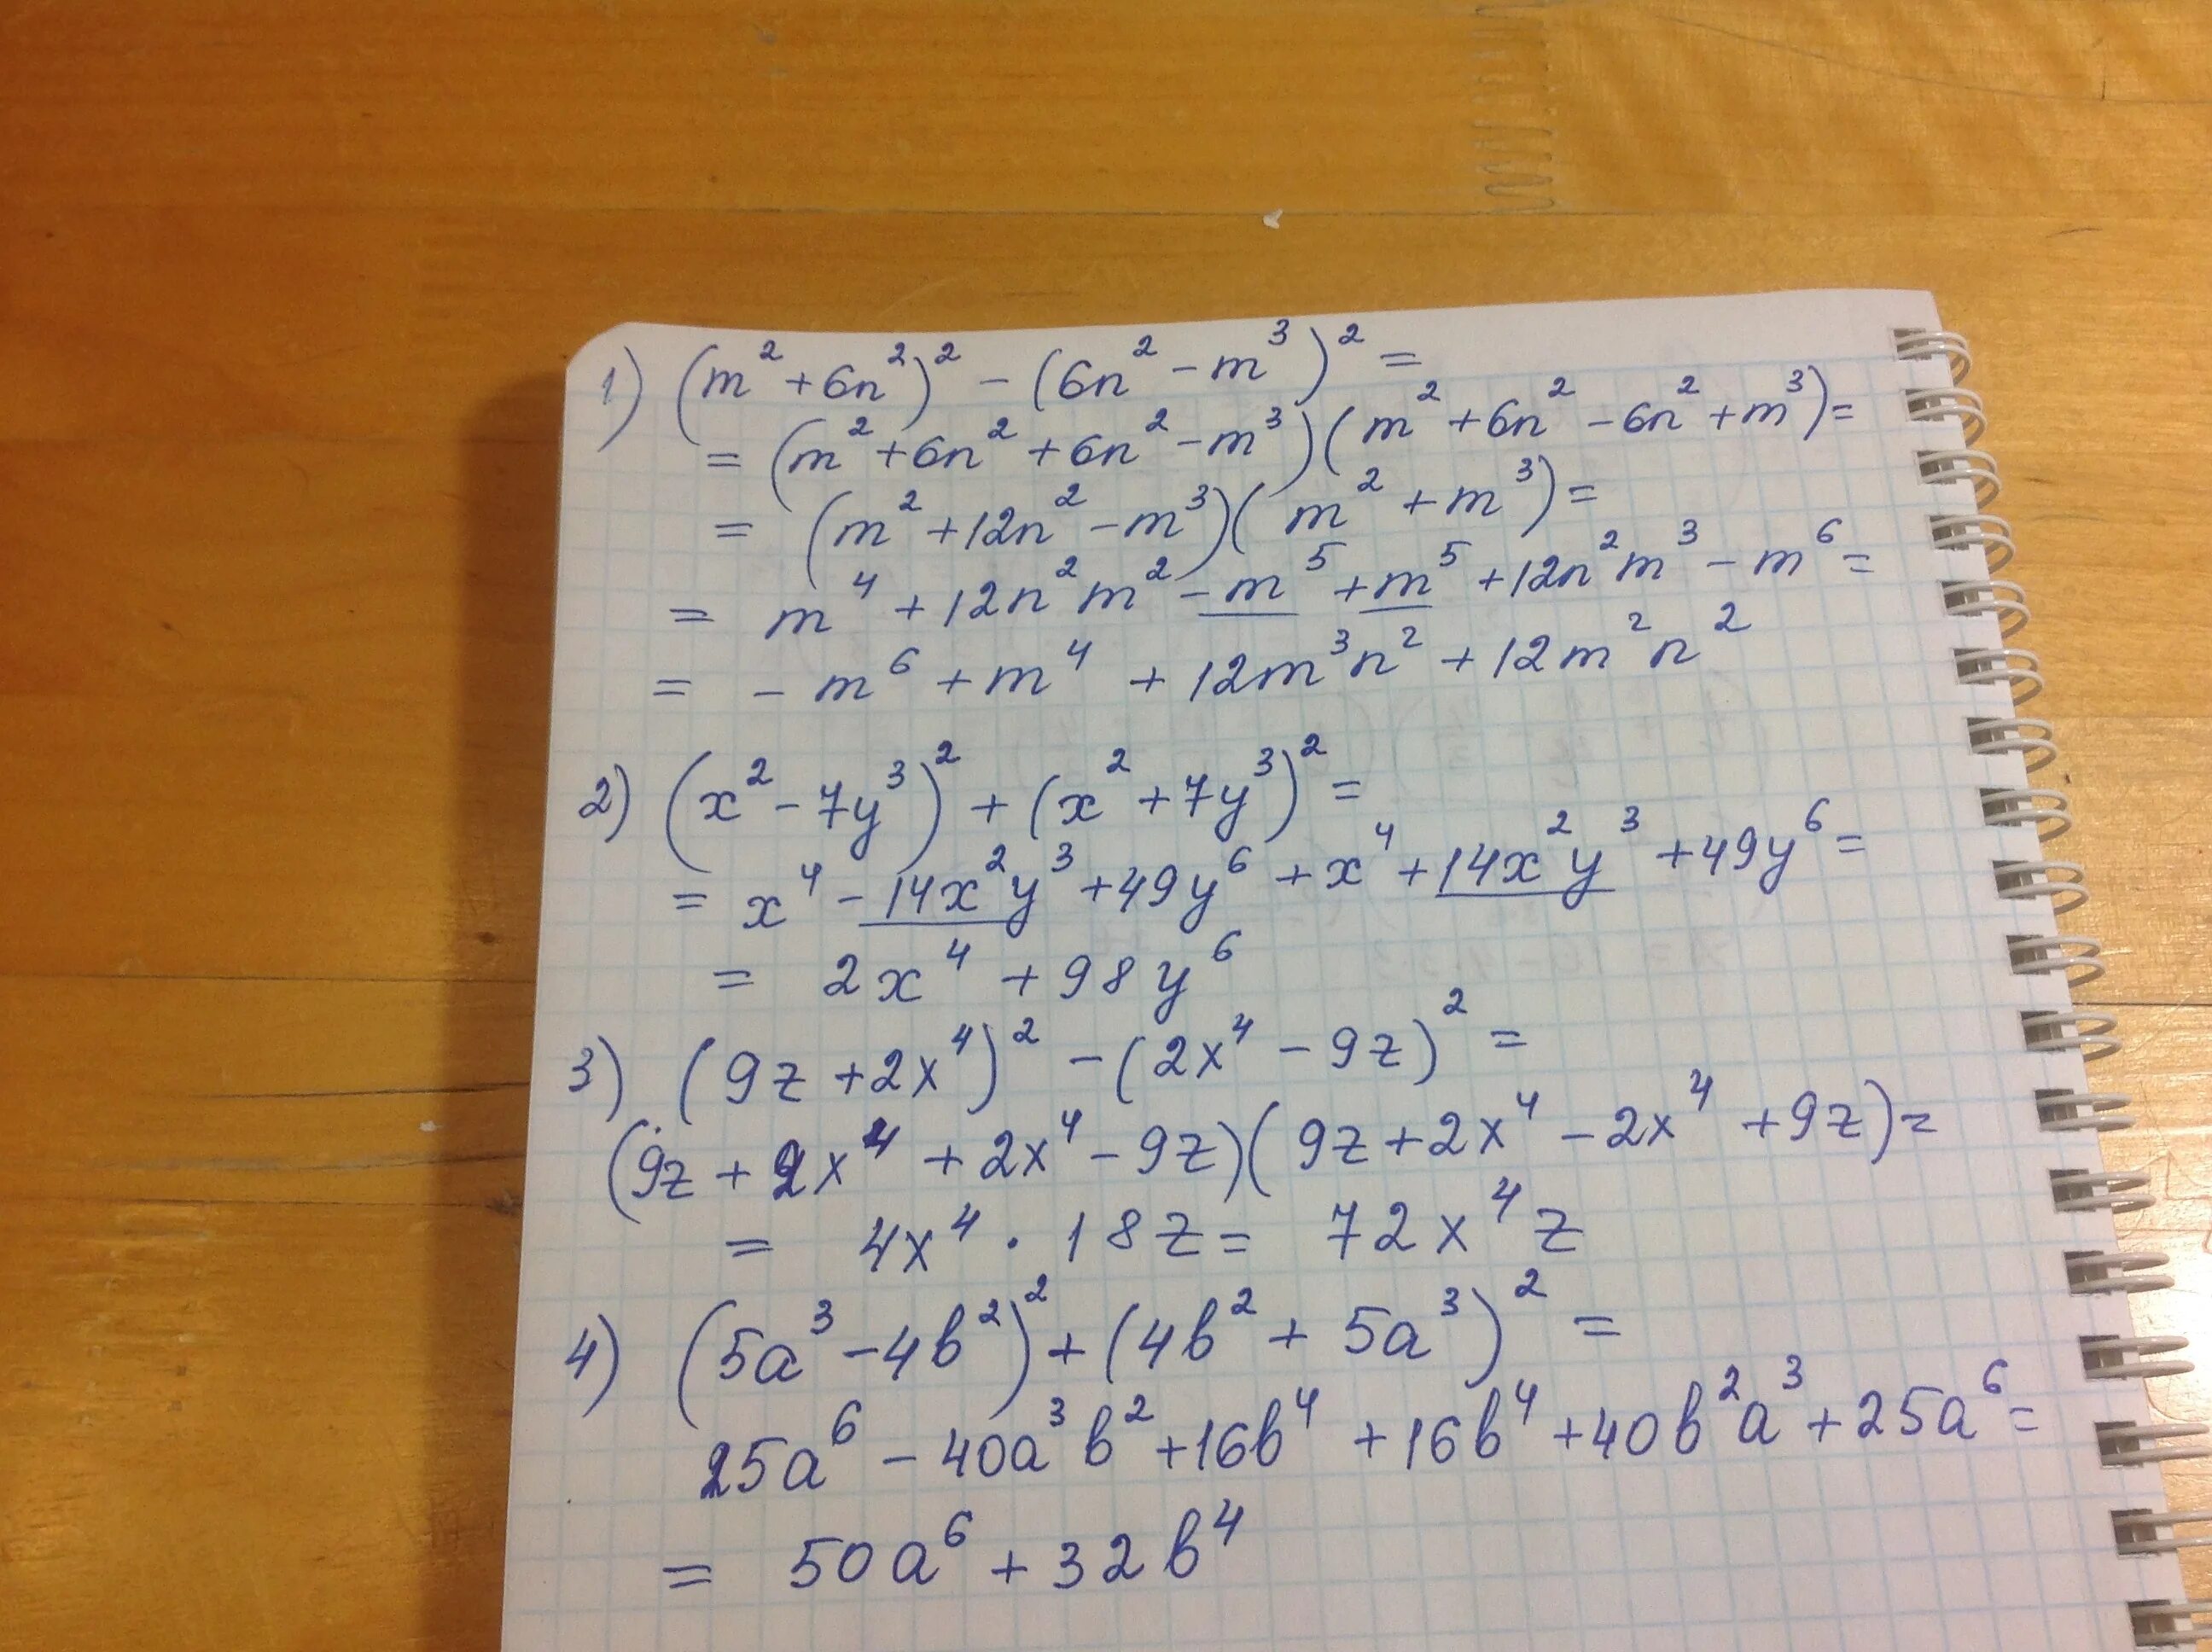 Упростите выражение 6x 3 5 2x. (M+2)2 - (3m + 3)2 = 0. Упростите выражение 1 m n 1 m n 2 3m 3n. (0-3)^2+(5-2)^2. (3x+1)^2+(x-7)^2.